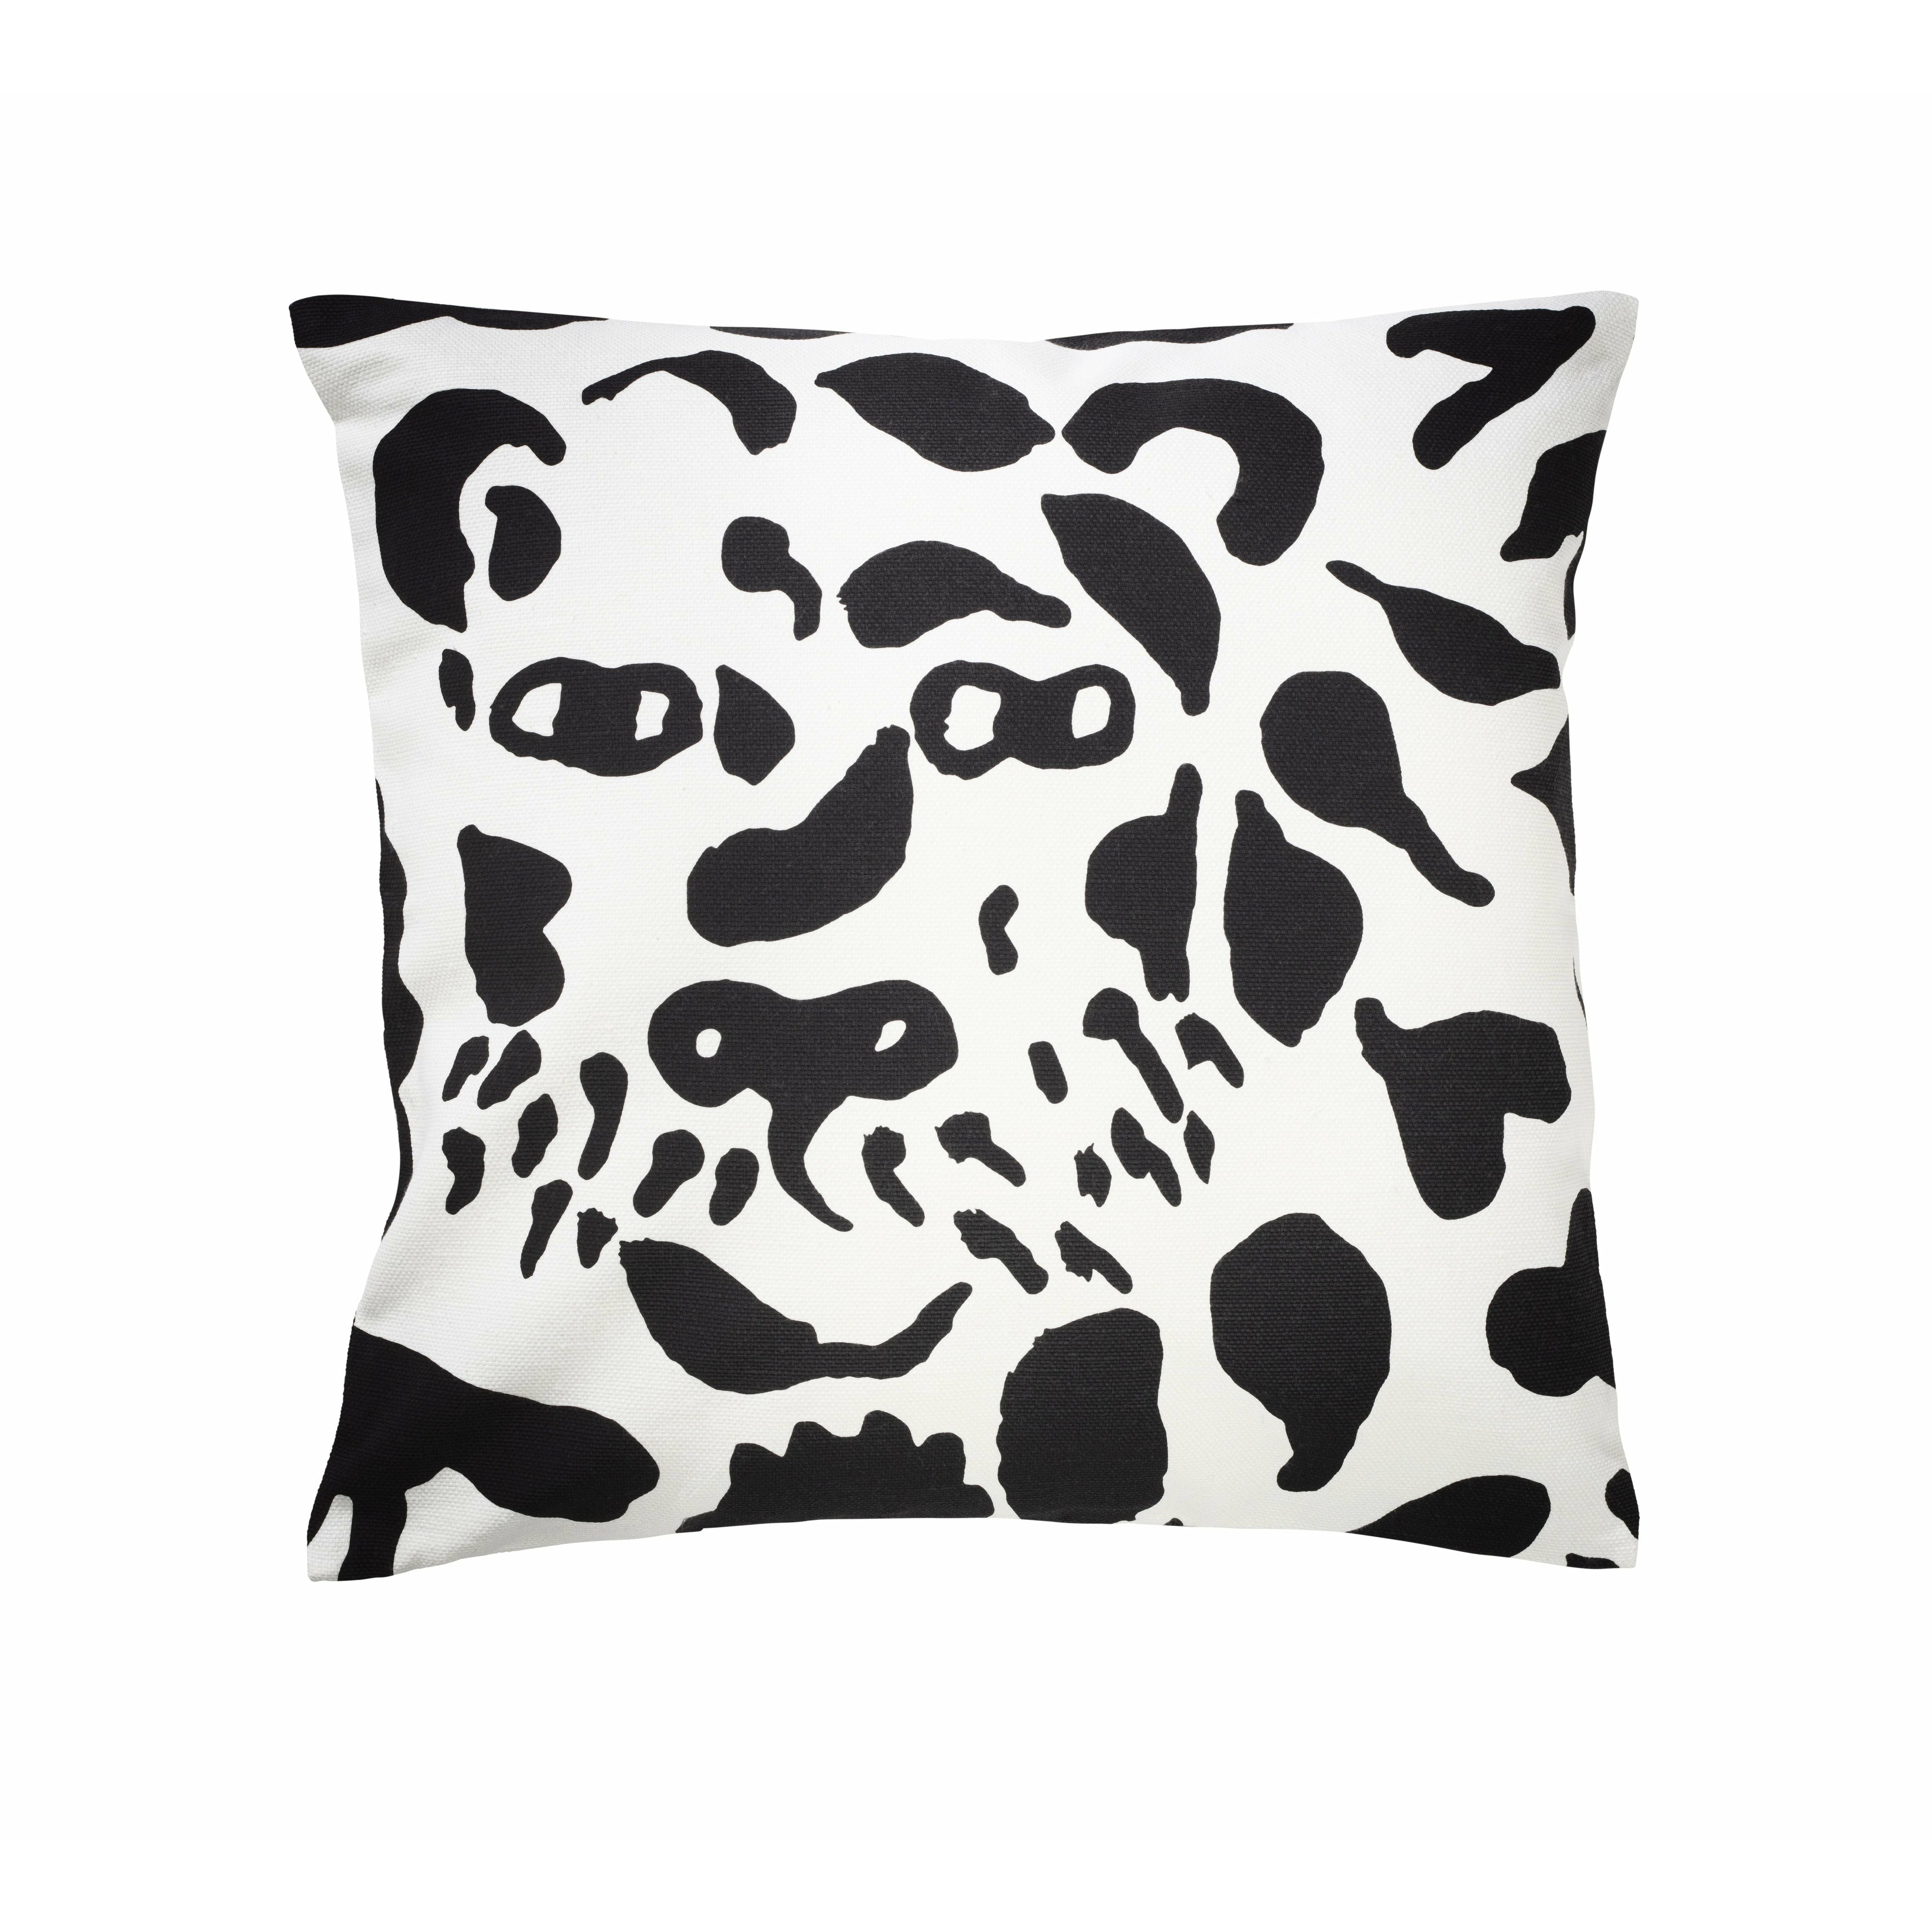 Iittala Oiva Toikka Pillowcase 47x47cm, Cheetah Black/White